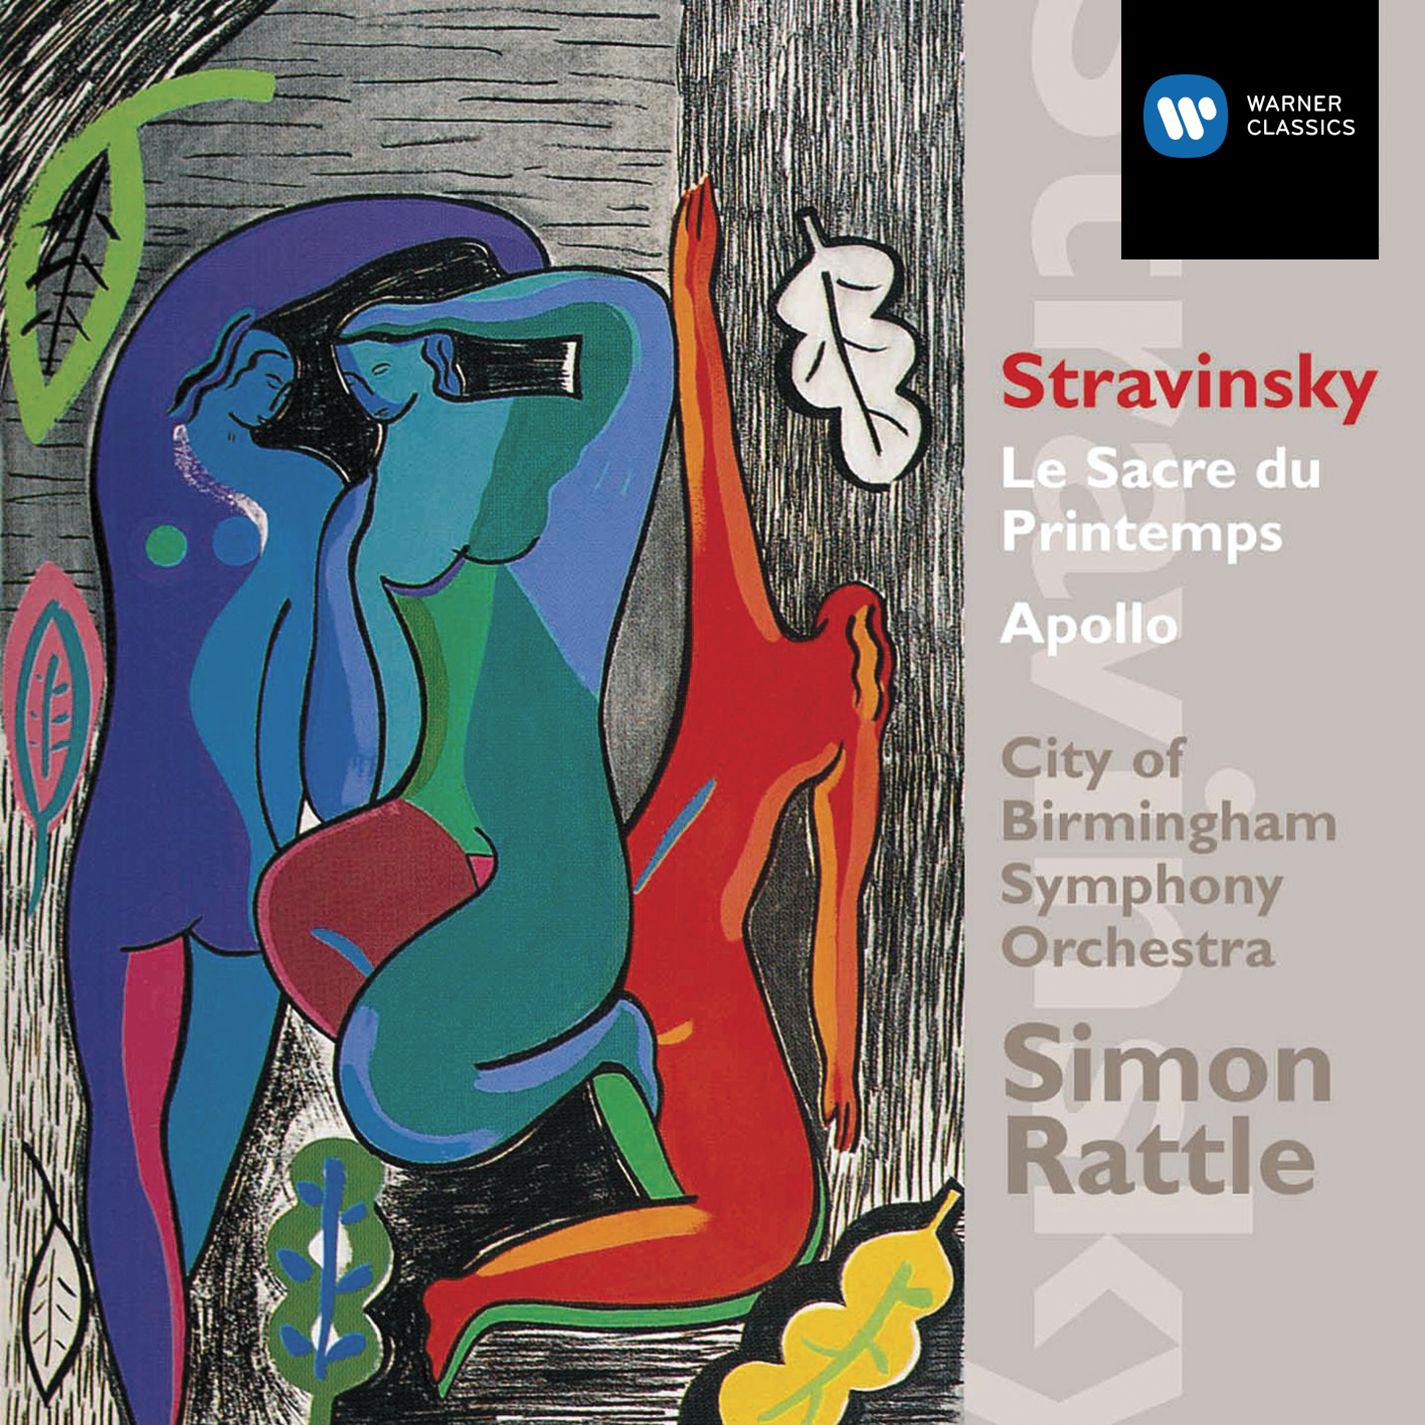 Stravinsky: Le sacre du printemps  Apollon musage te